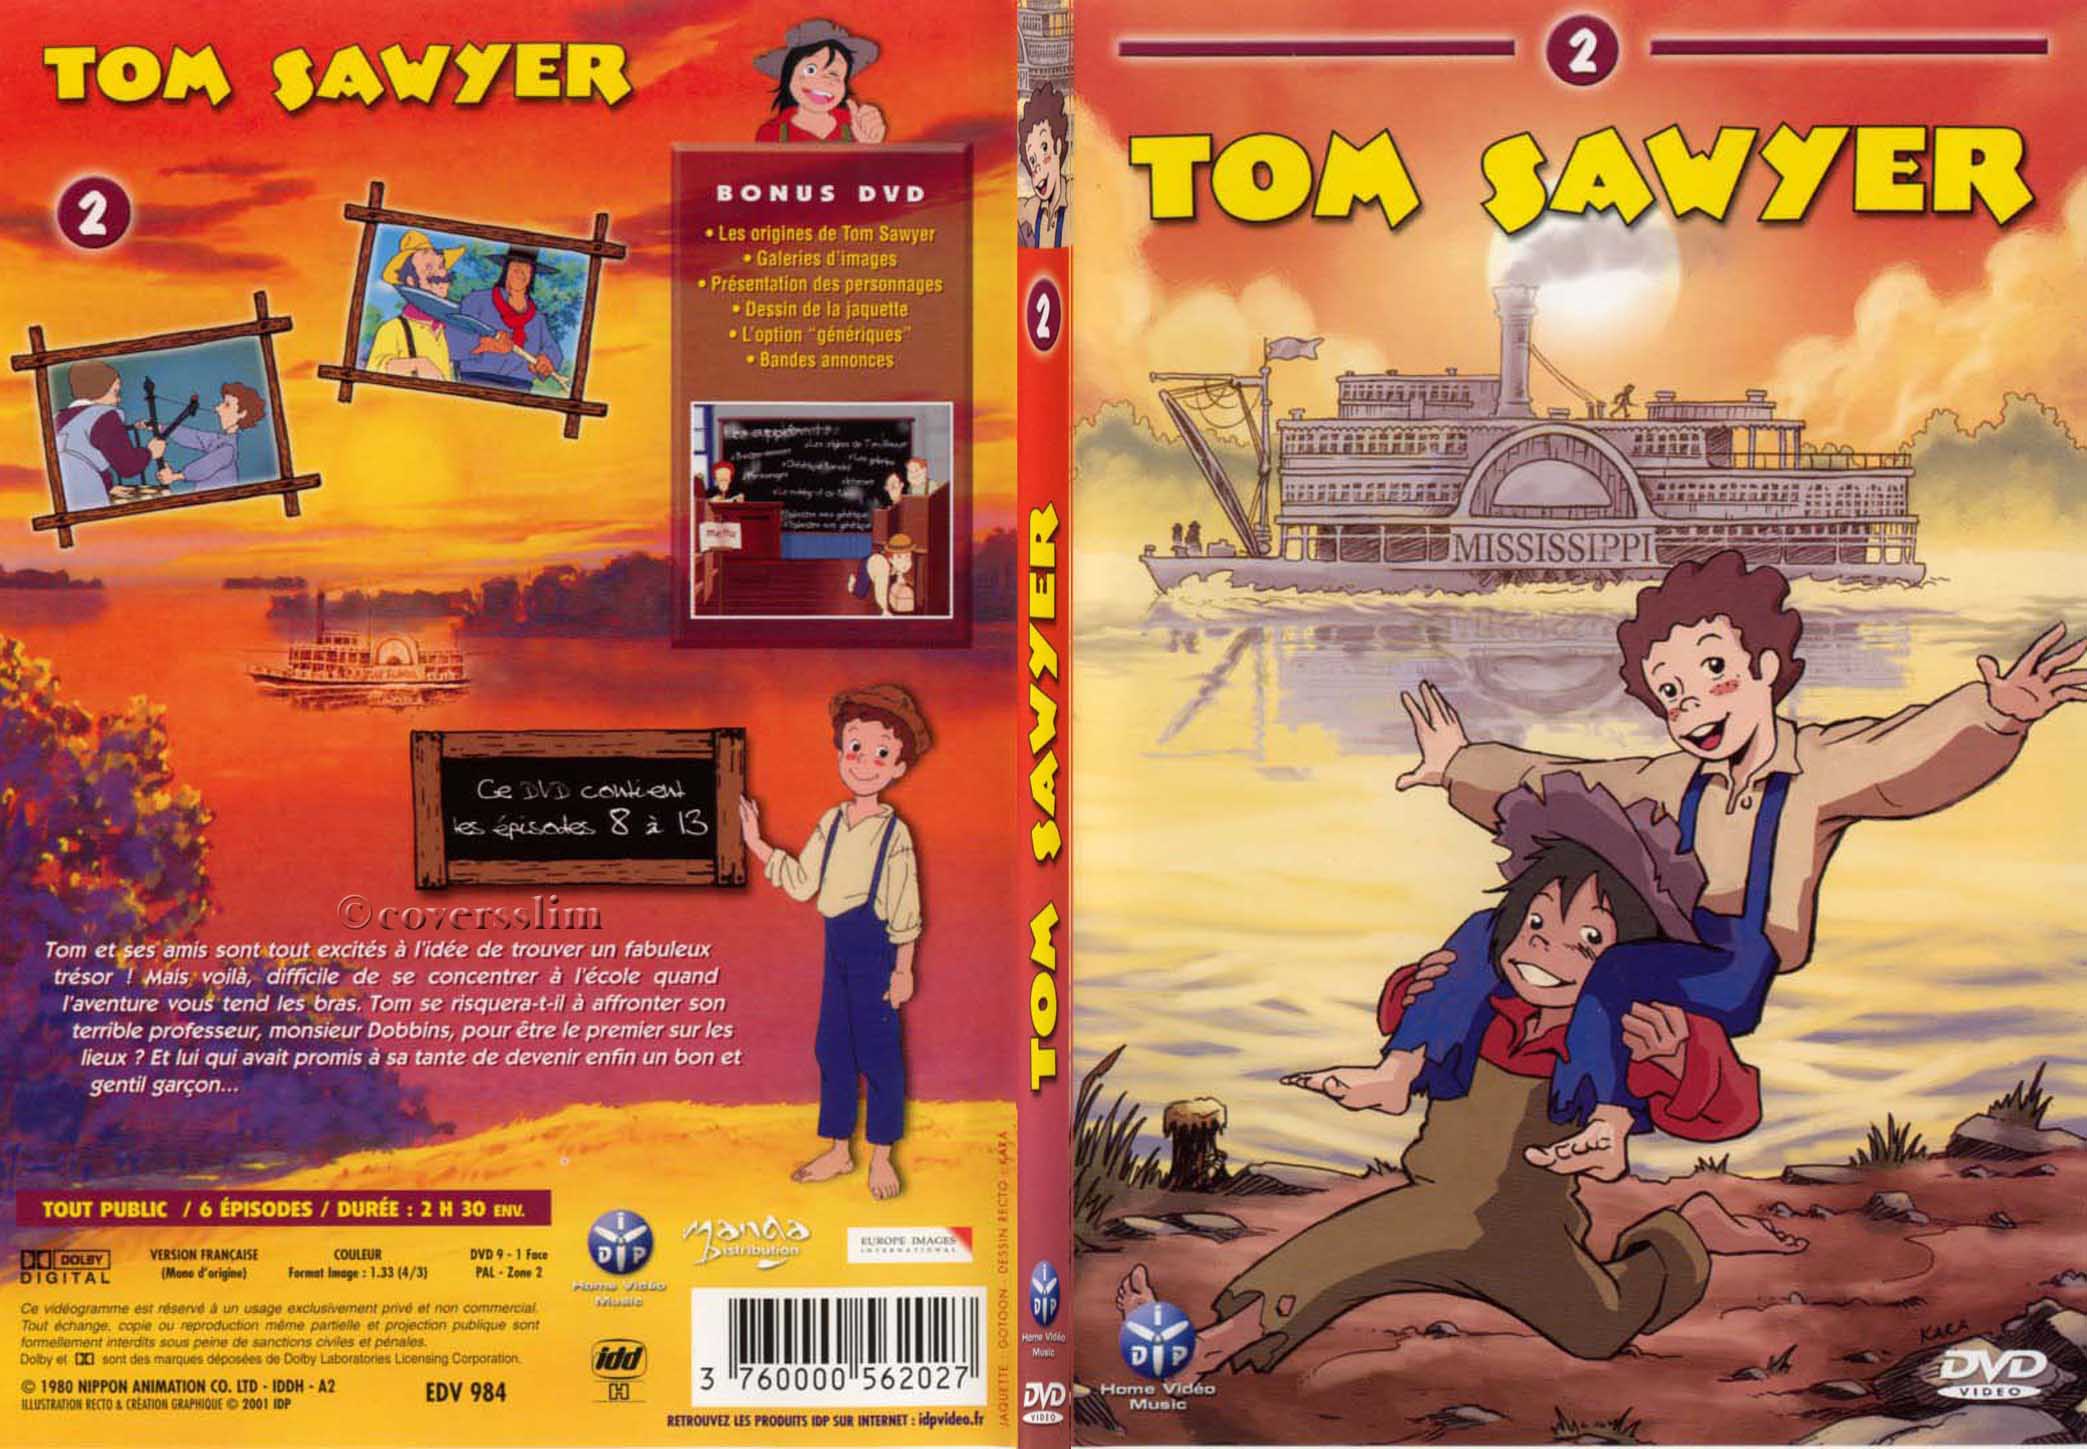 Jaquette DVD Tom Sawyer vol 2 - SLIM v2